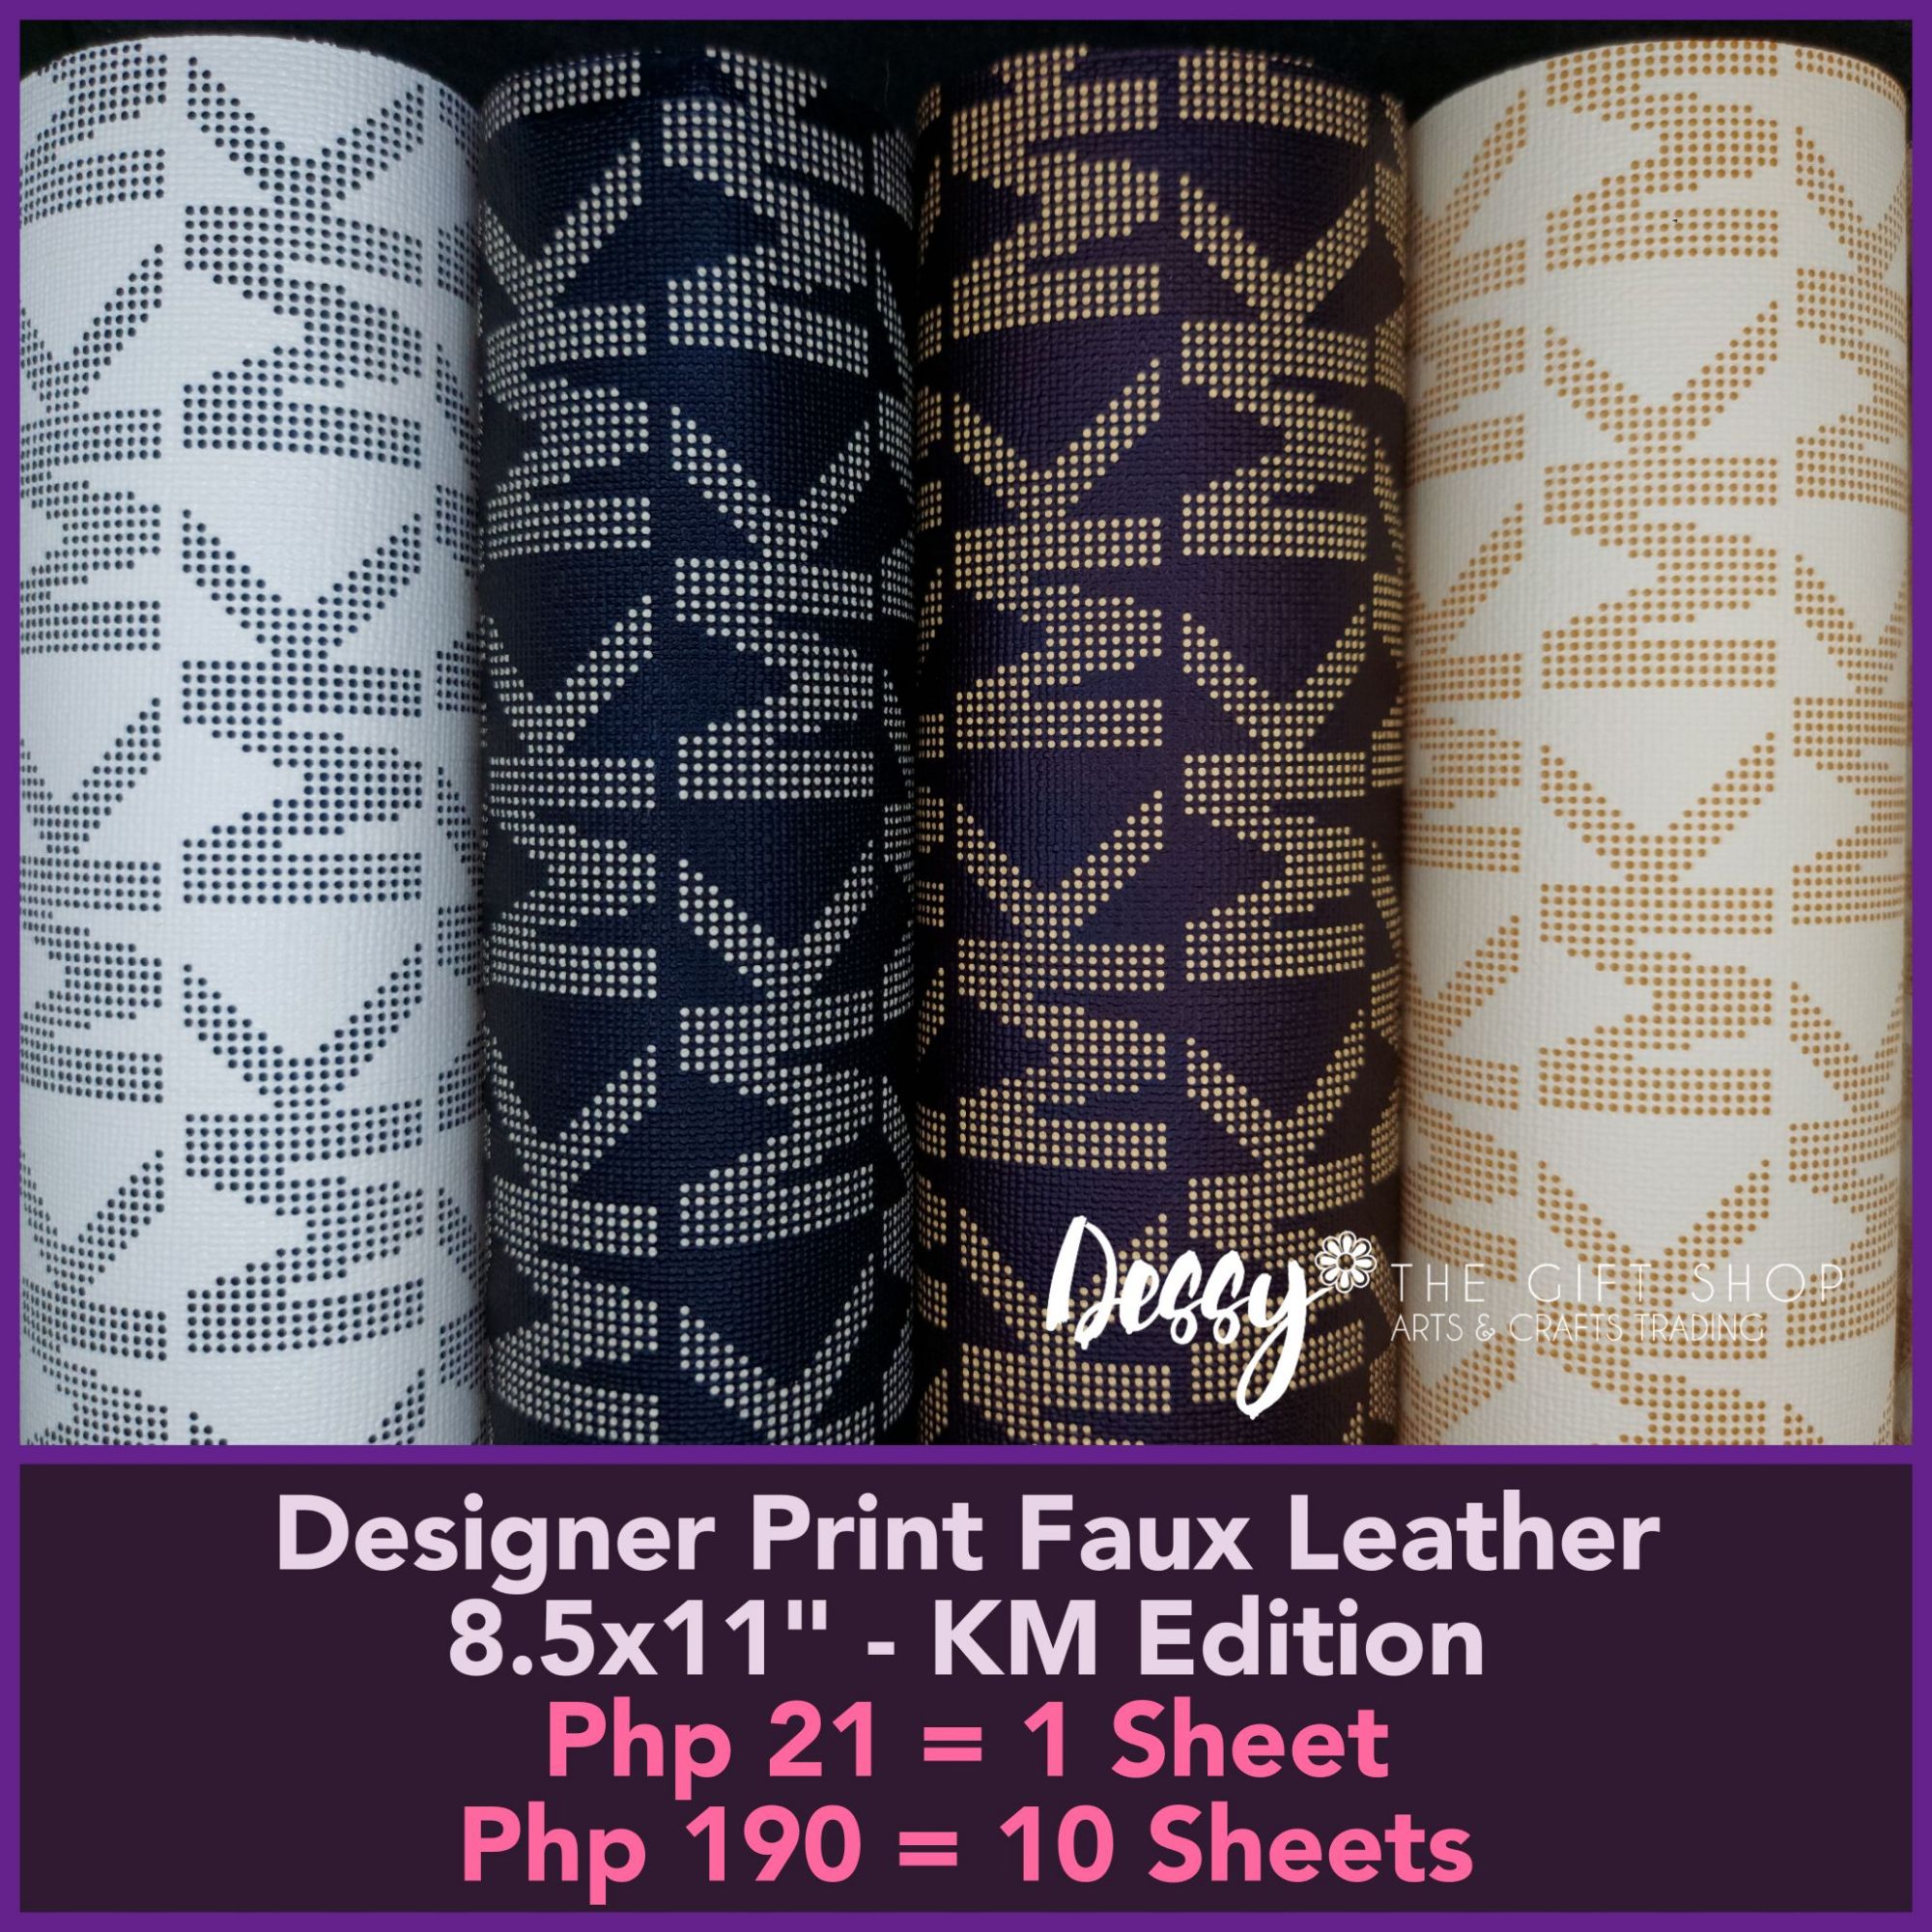 Yayamanin Designer Brand Faux Leather - 11x8.5- PVC Type (Short